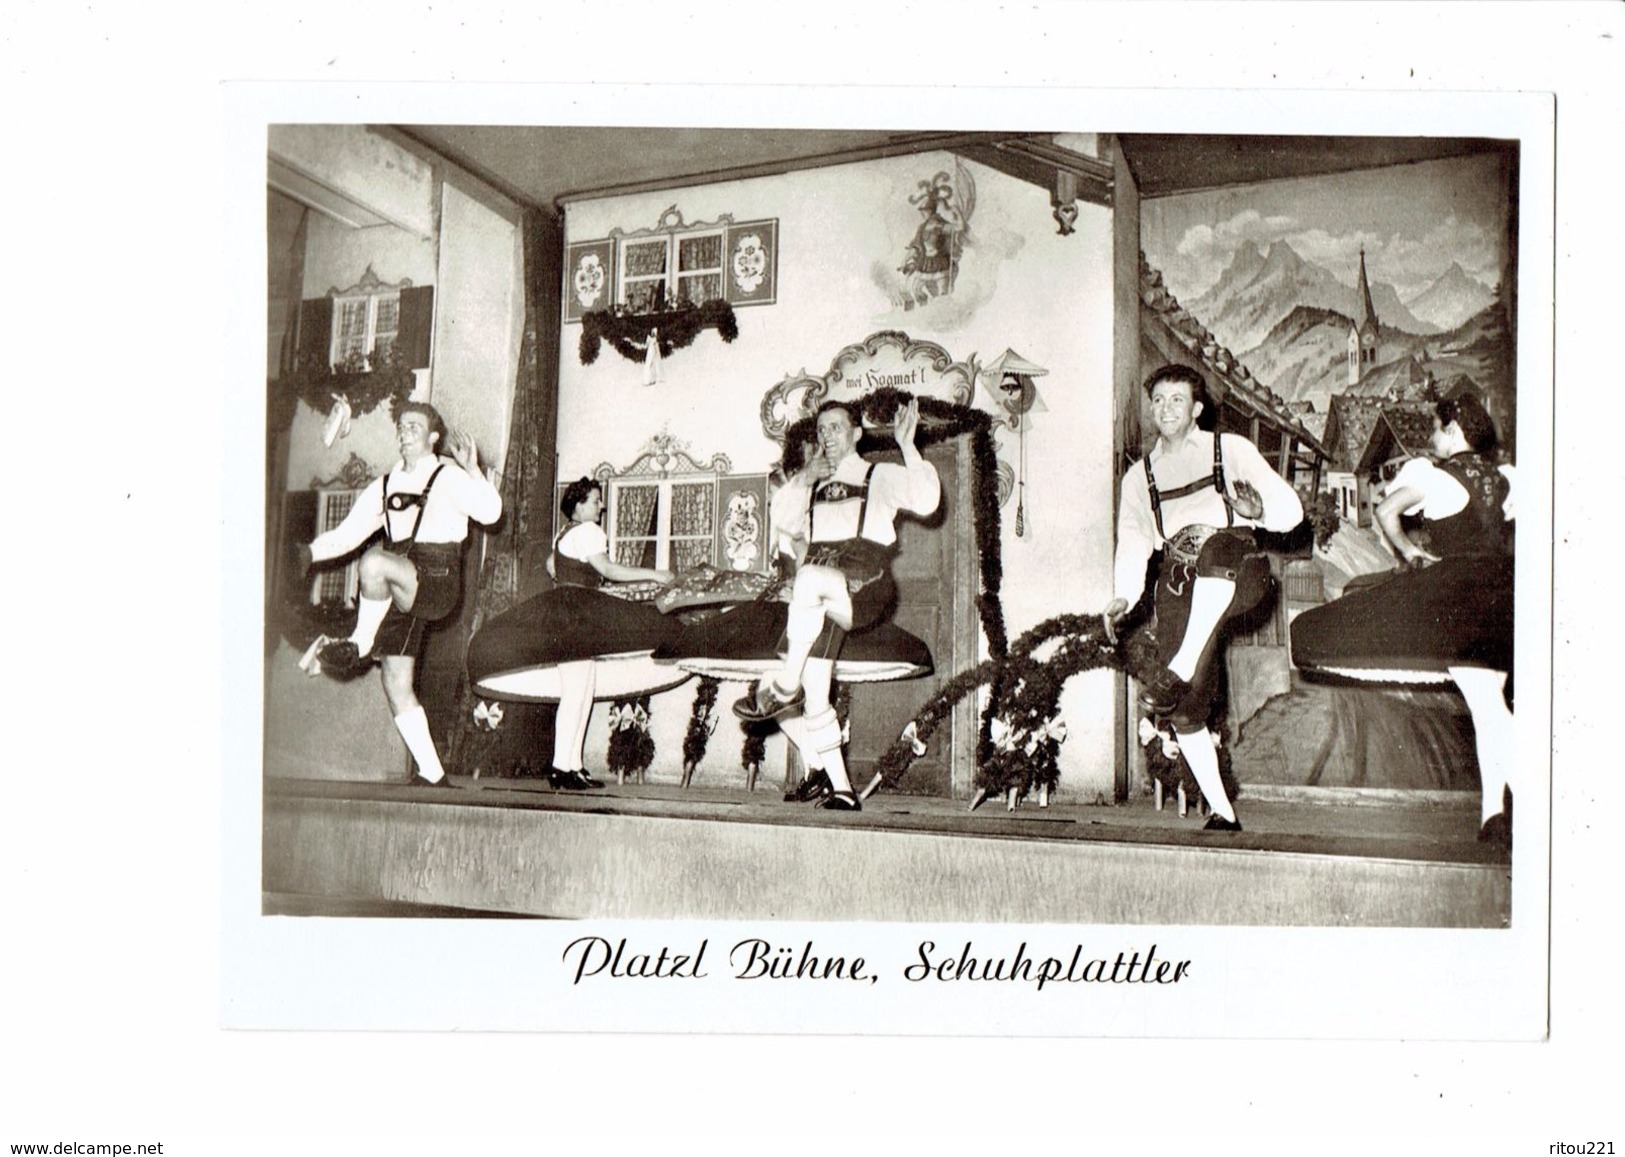 Lot 2 Cpm - PLATZL BÜHNE SCHUHPLATTLER / TRACHTENTANZ - Folklore Danse Robe à Volant Cloche Dessin Mural - Danses